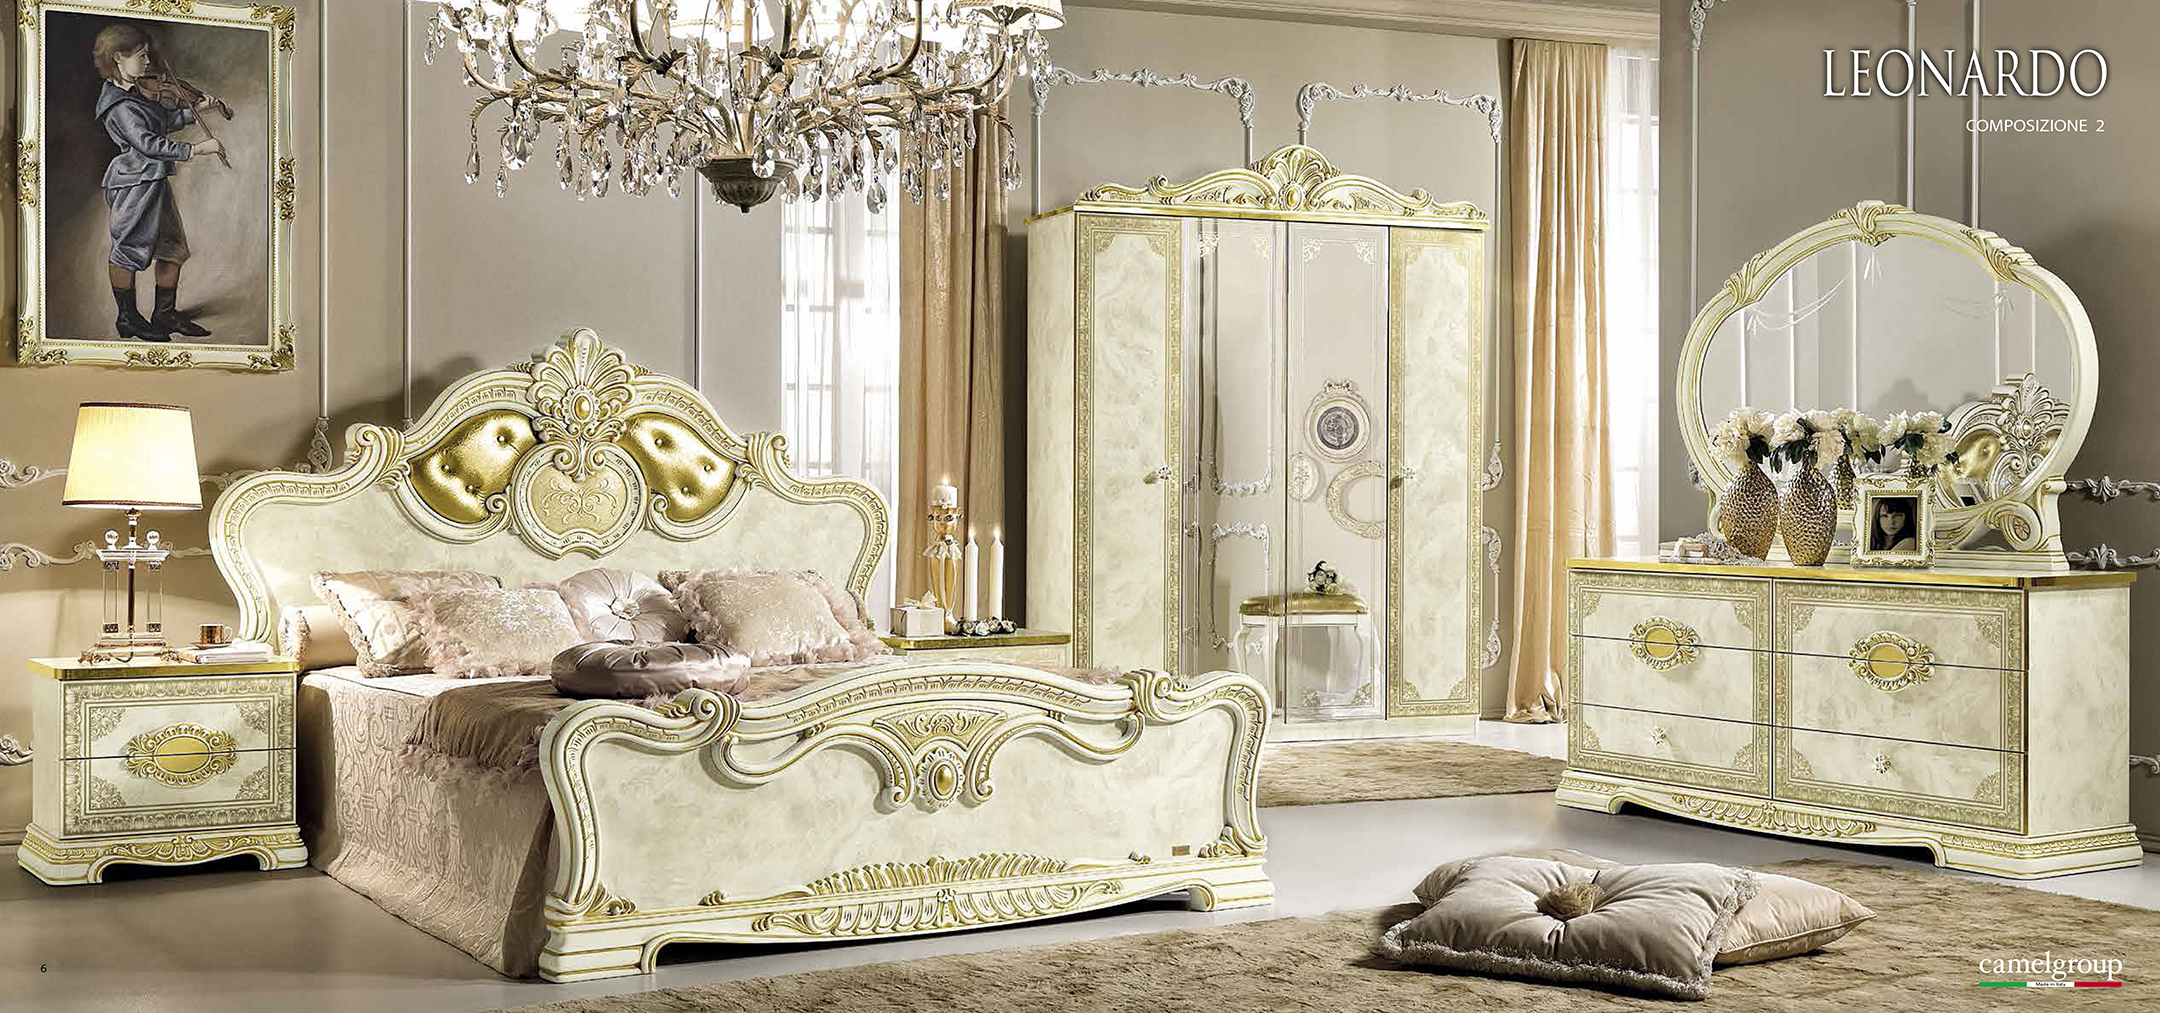 Brands Camel Modum Collection, Italy Leonardo Bedroom Additional Items